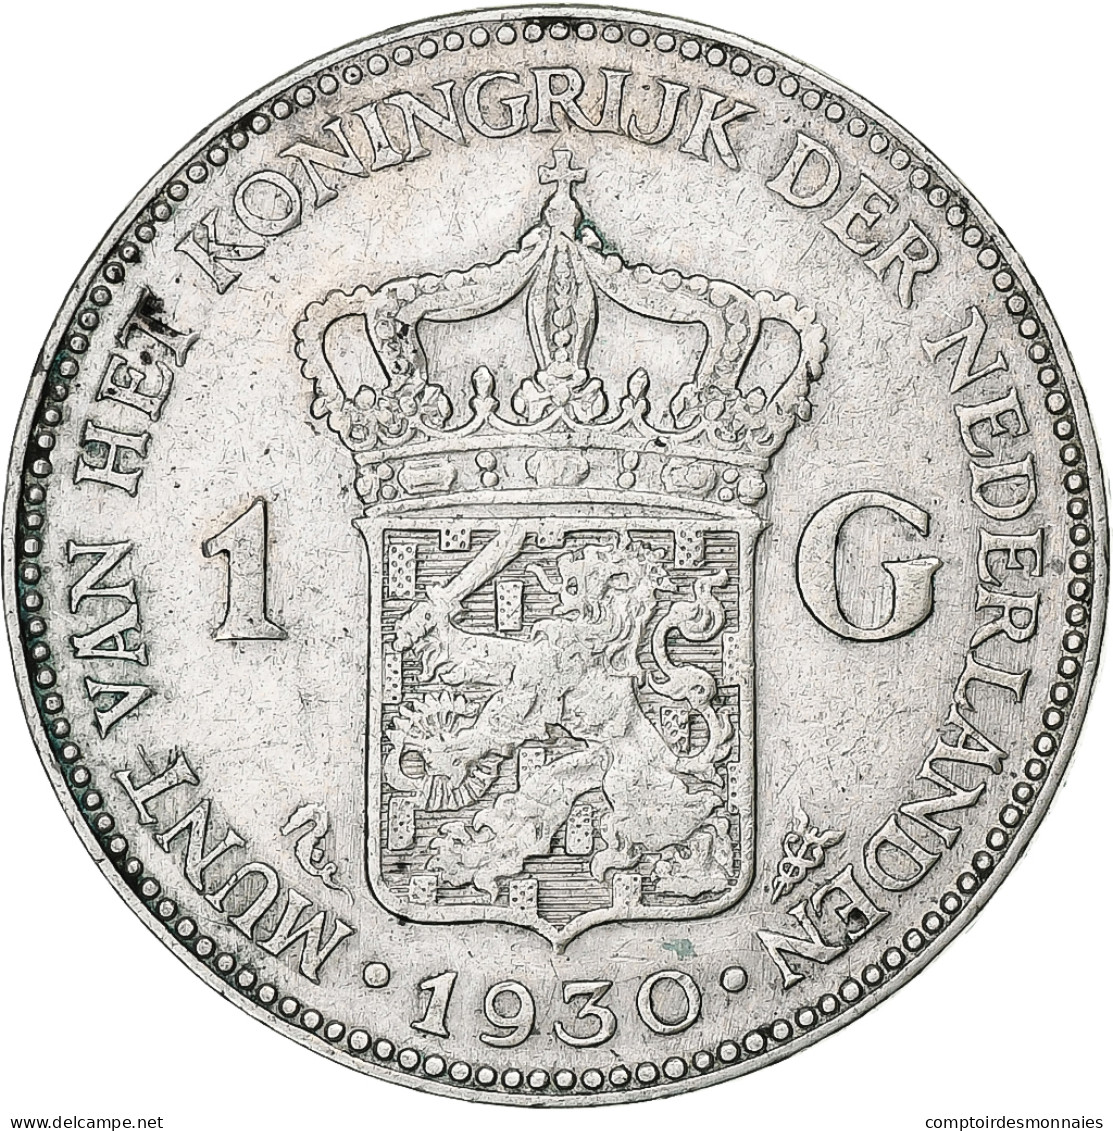 Monnaie, Pays-Bas, Wilhelmina I, Gulden, 1930, TB+, Argent, KM:161.1 - 1 Florín Holandés (Gulden)